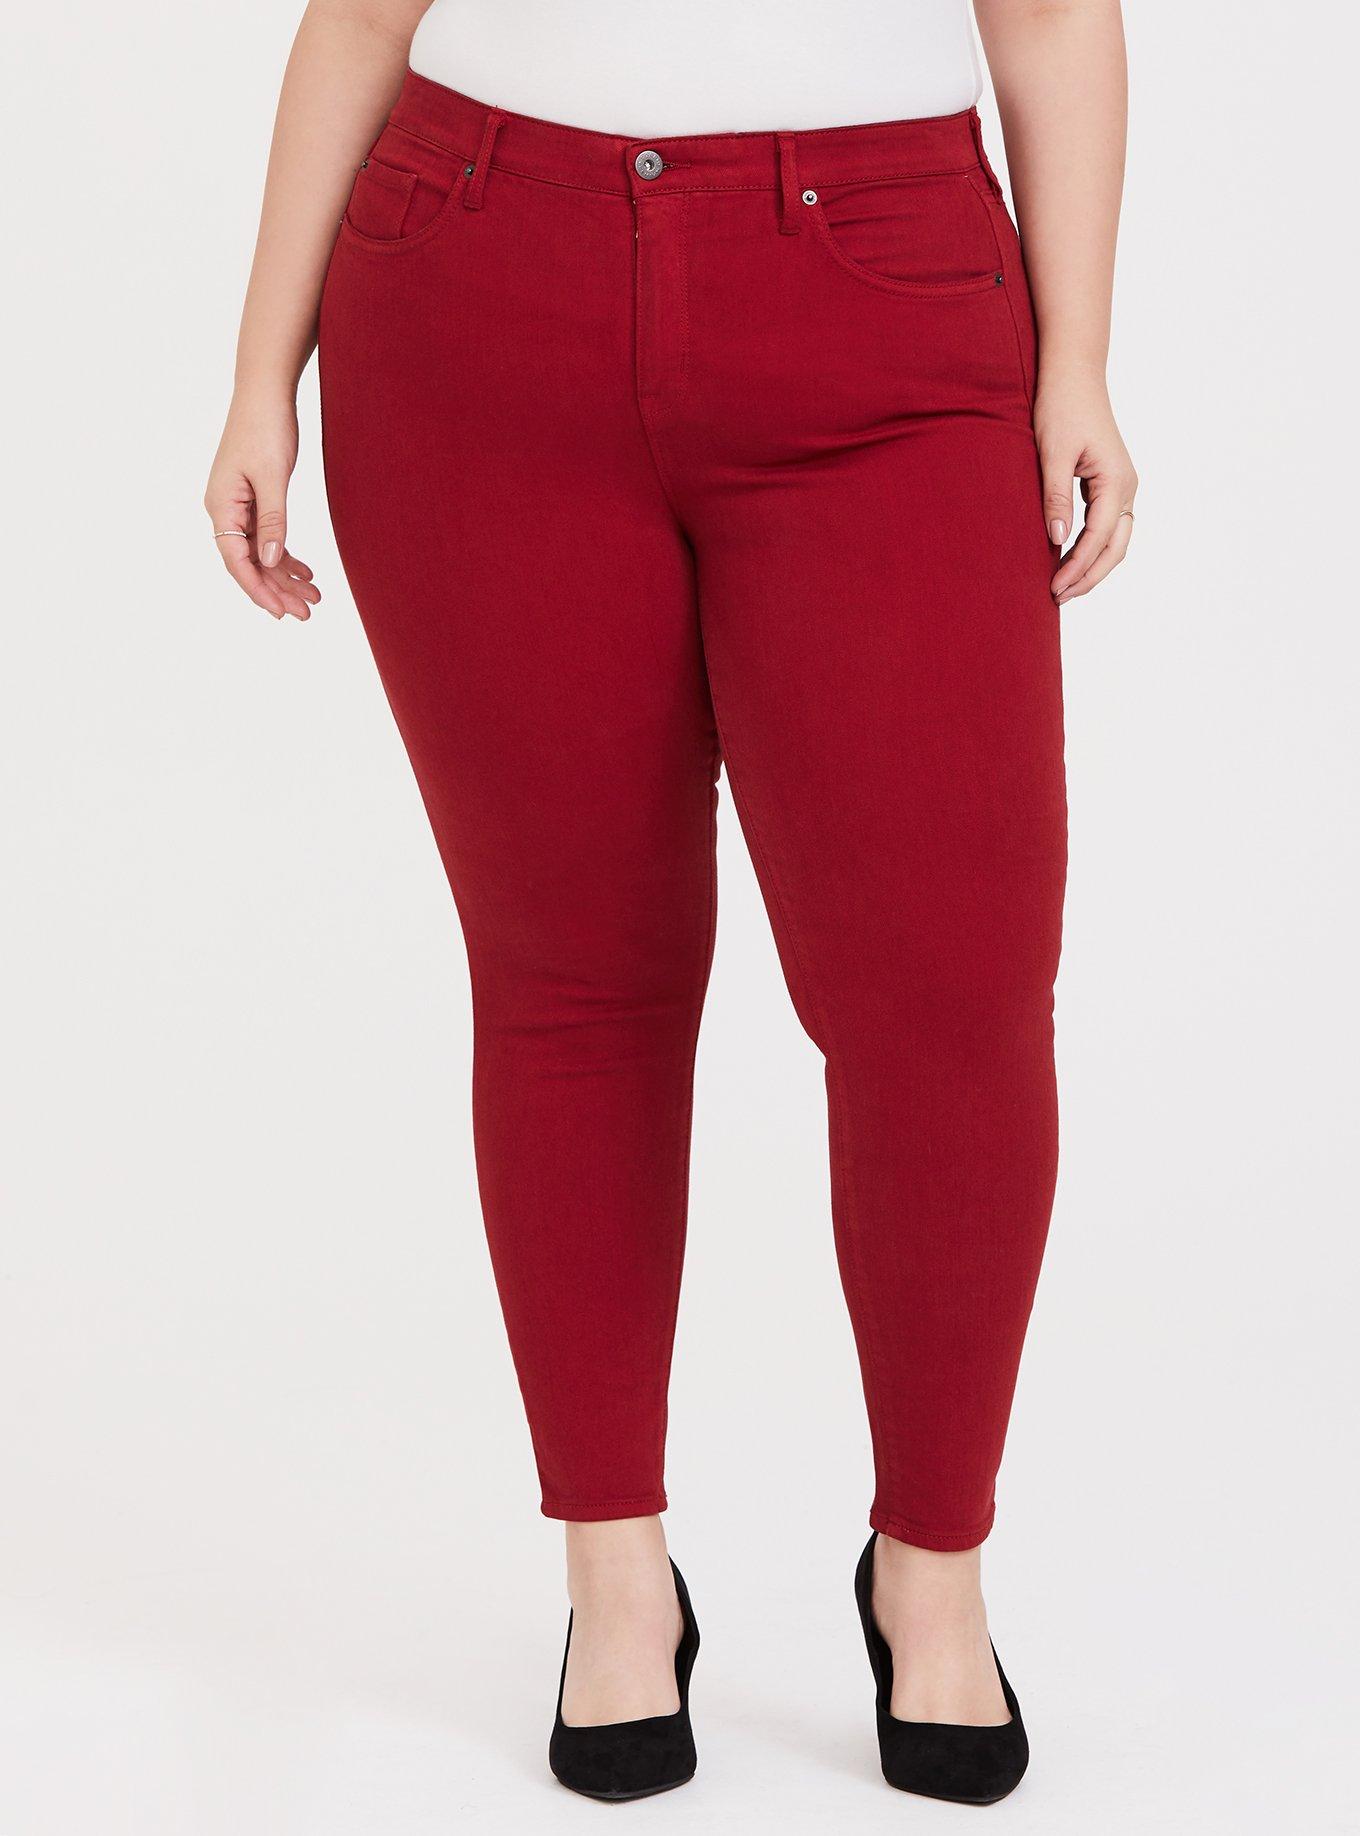 Womens Plus Size Burgundy Red Denim skinny jeans Stretch Pants